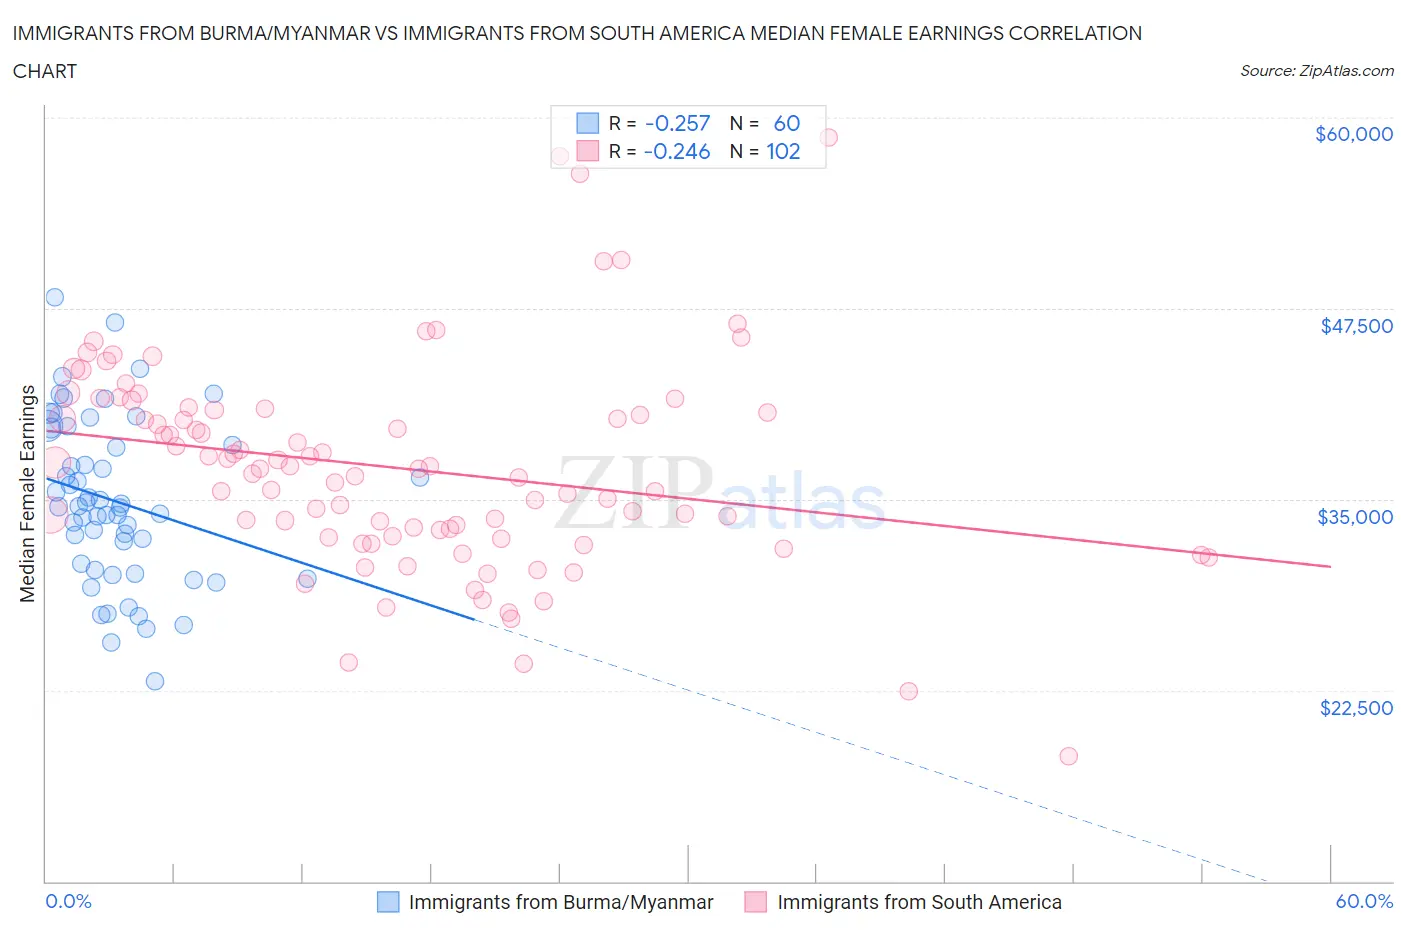 Immigrants from Burma/Myanmar vs Immigrants from South America Median Female Earnings